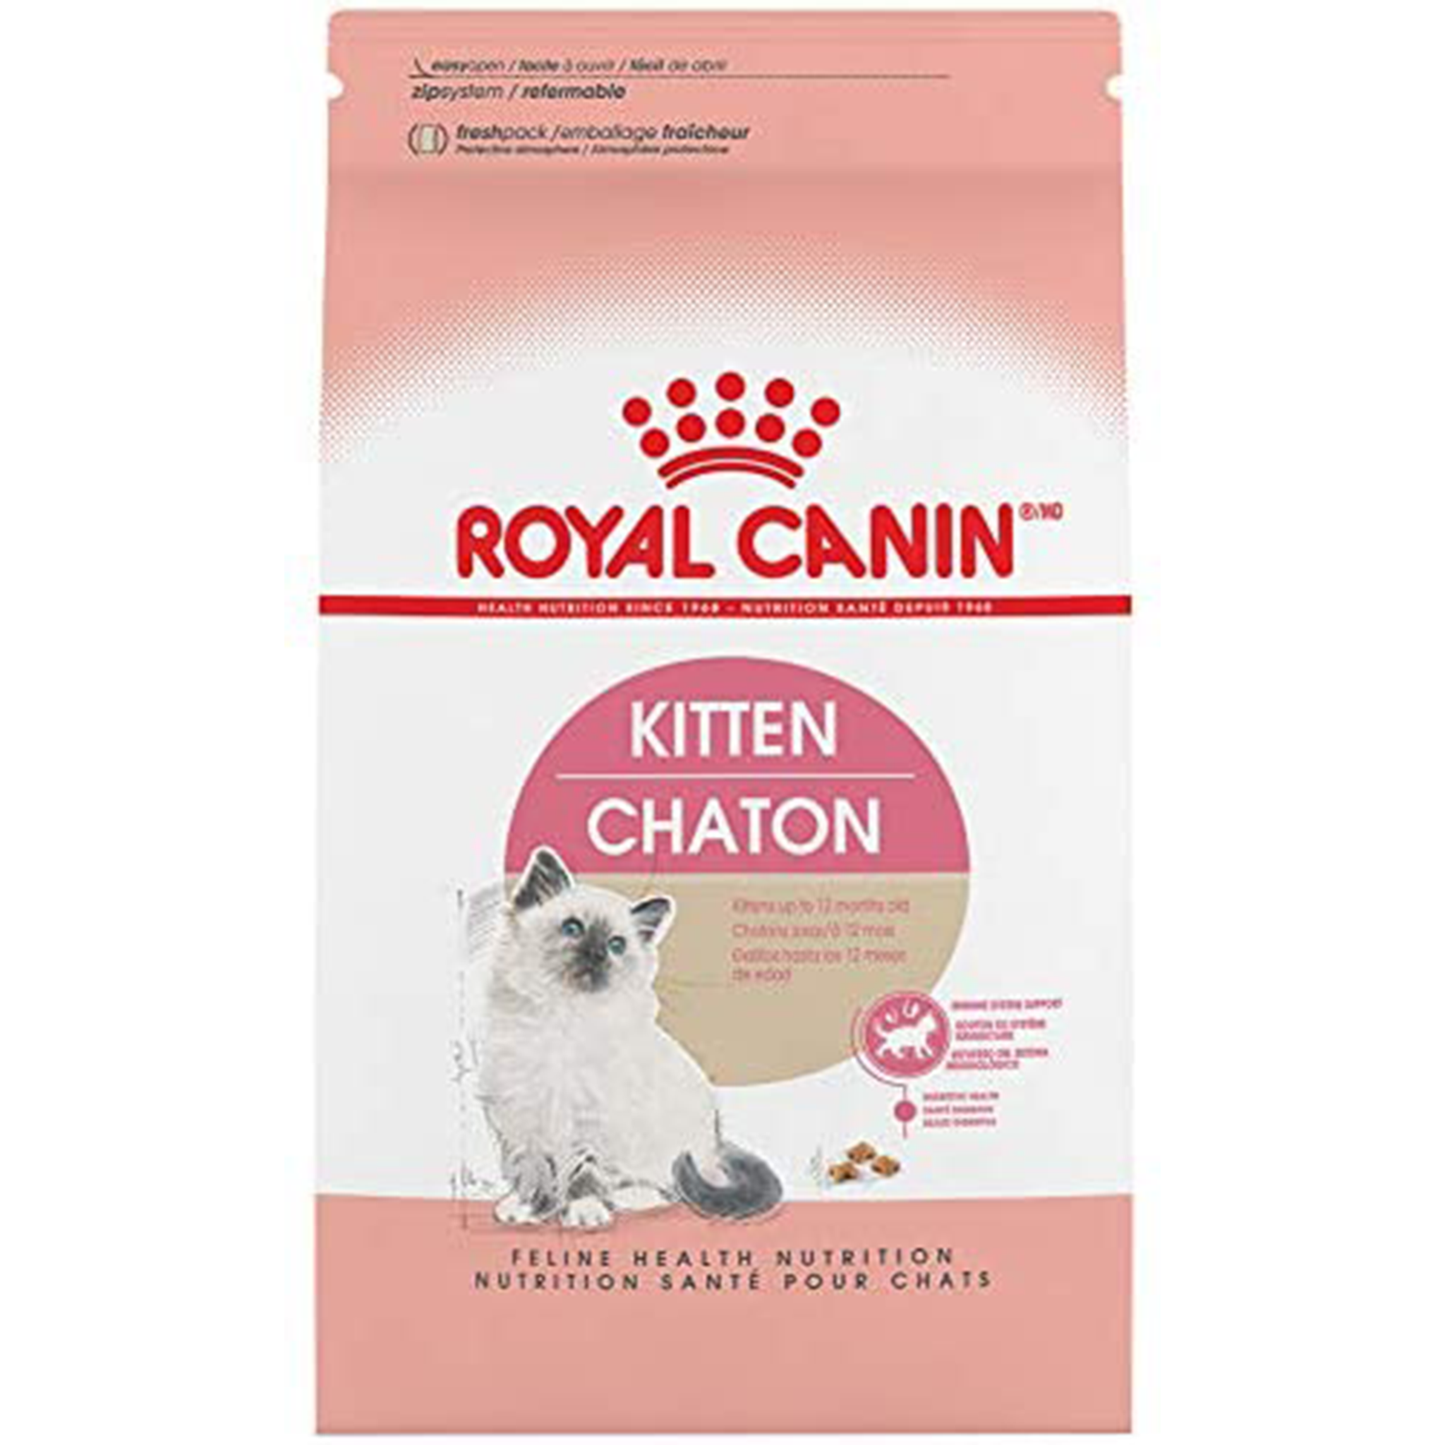 Royal Canin Kitten (3.5lbs bag)